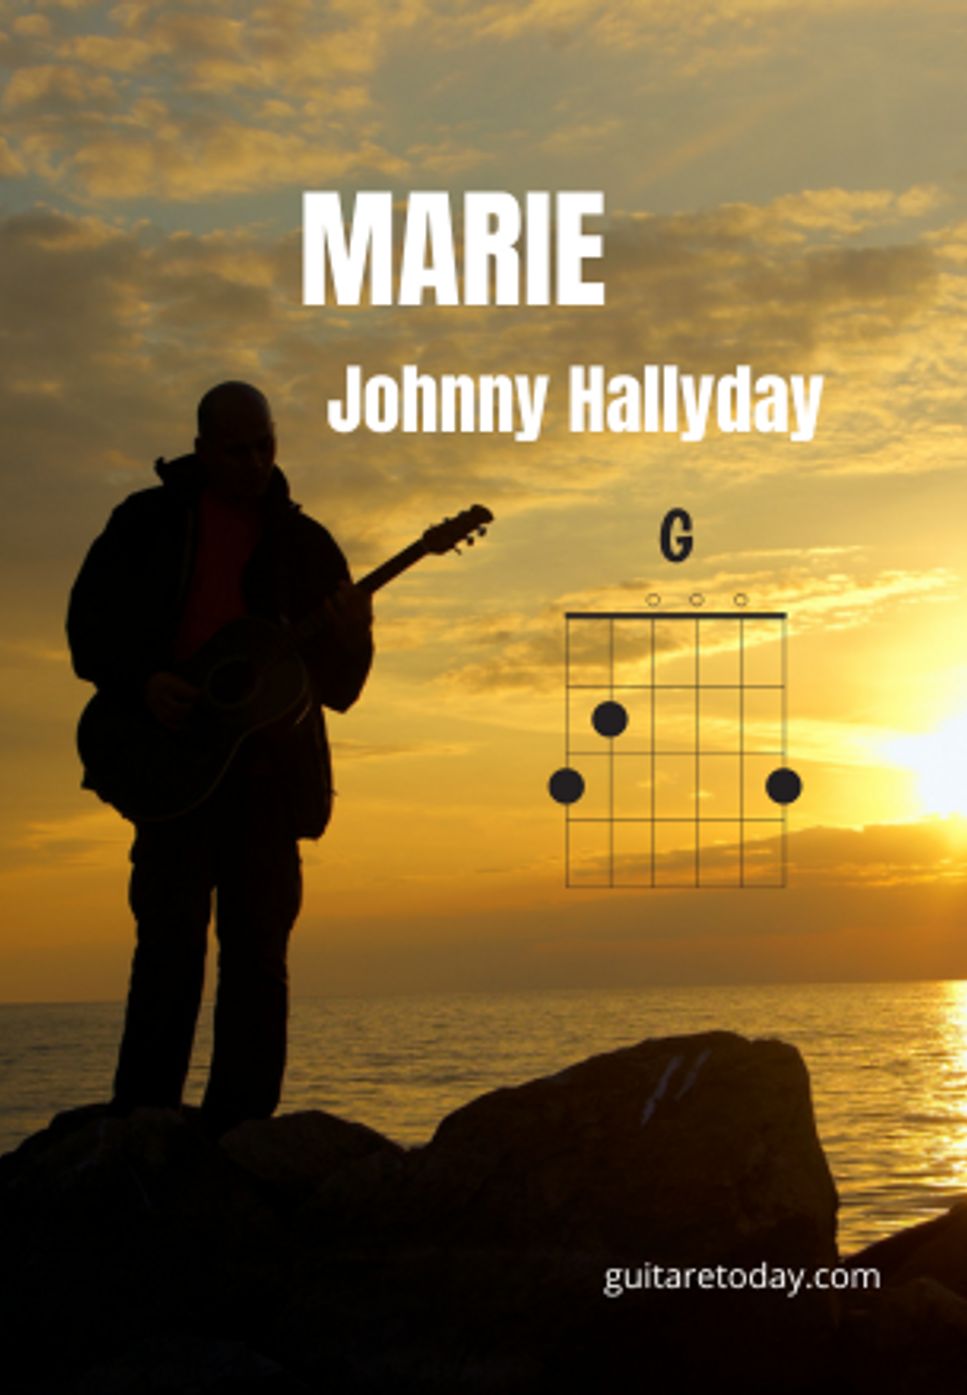 Johnny Hallyday - Marie by guitaretoday.com